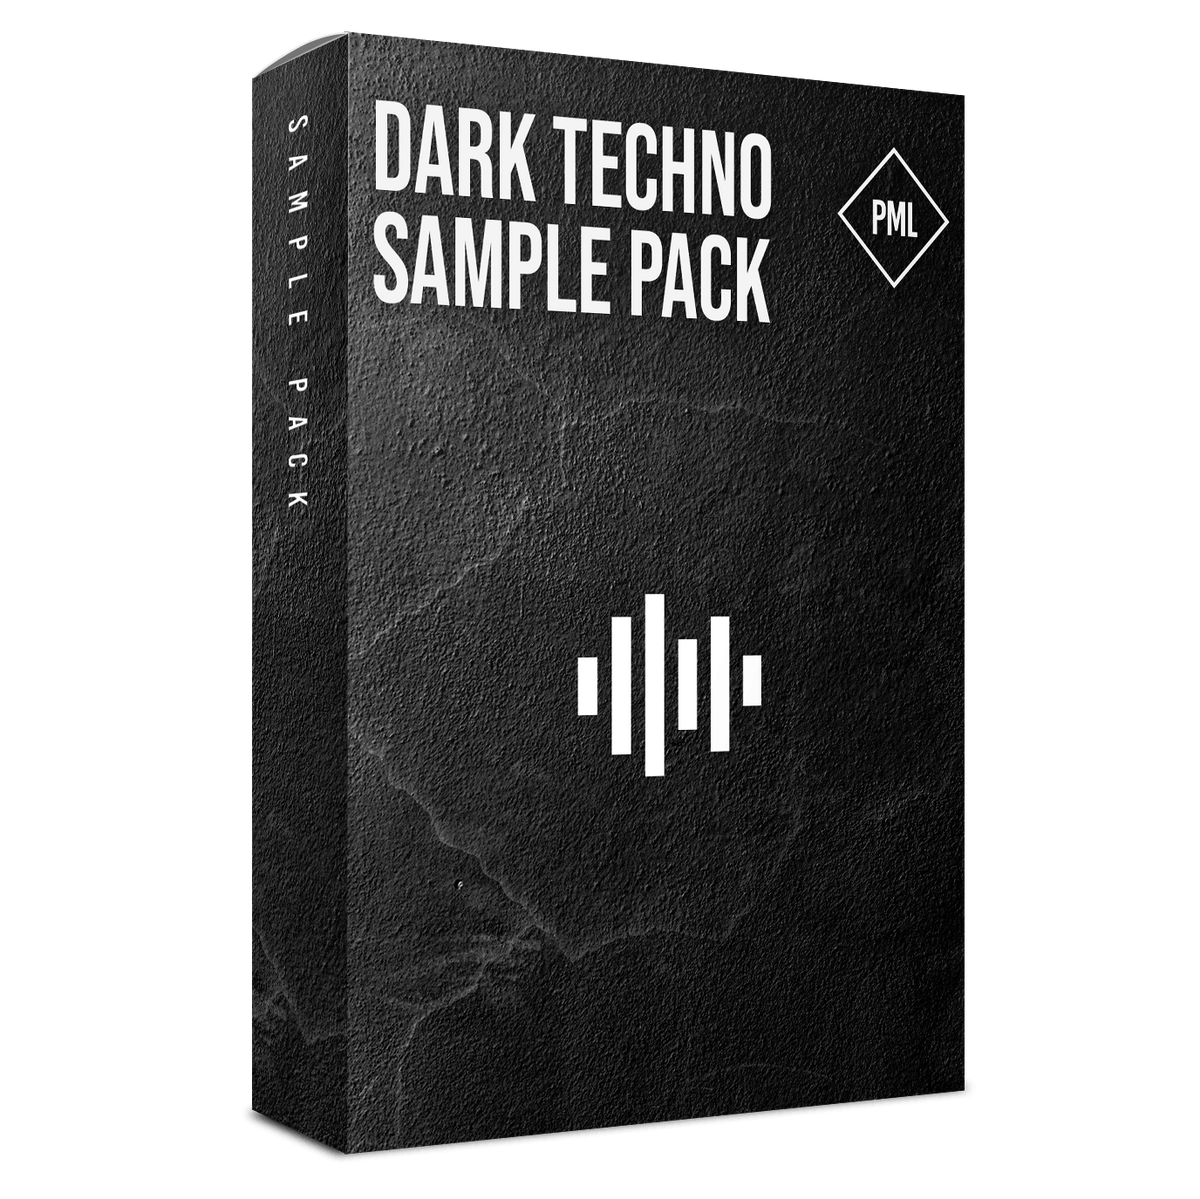 Dark Techno Sample Pack Product Box